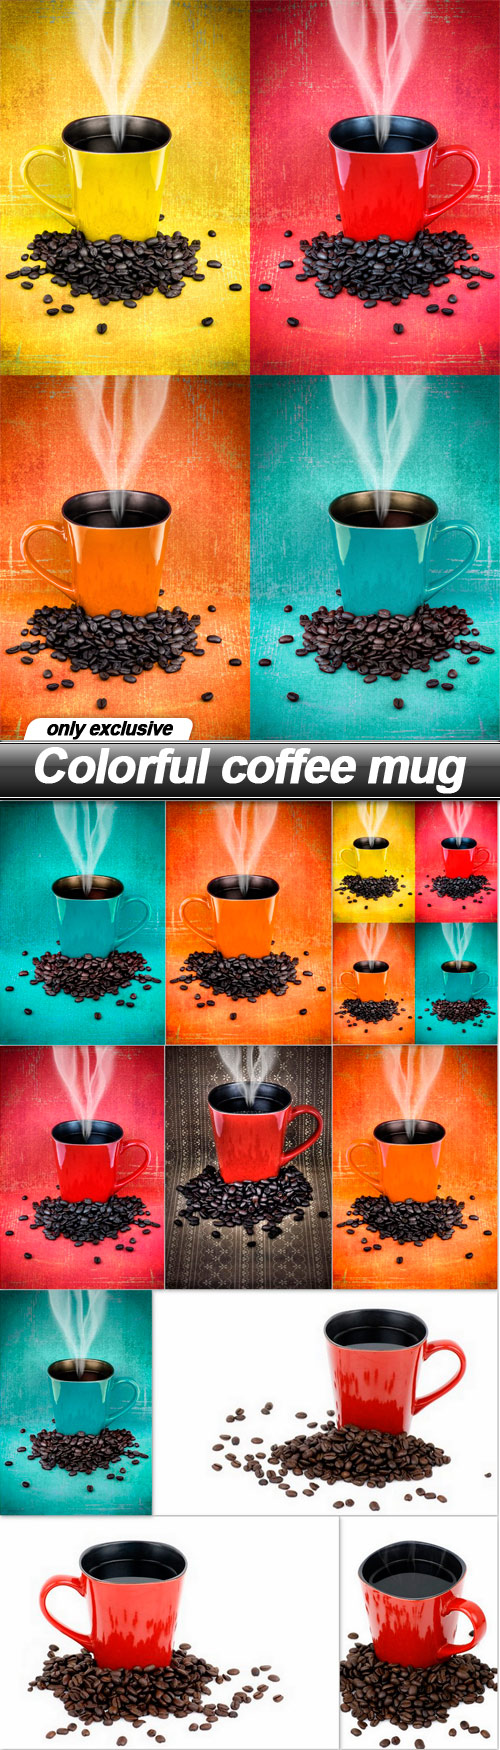 Colorful coffee mug - 10 UHQ JPEG